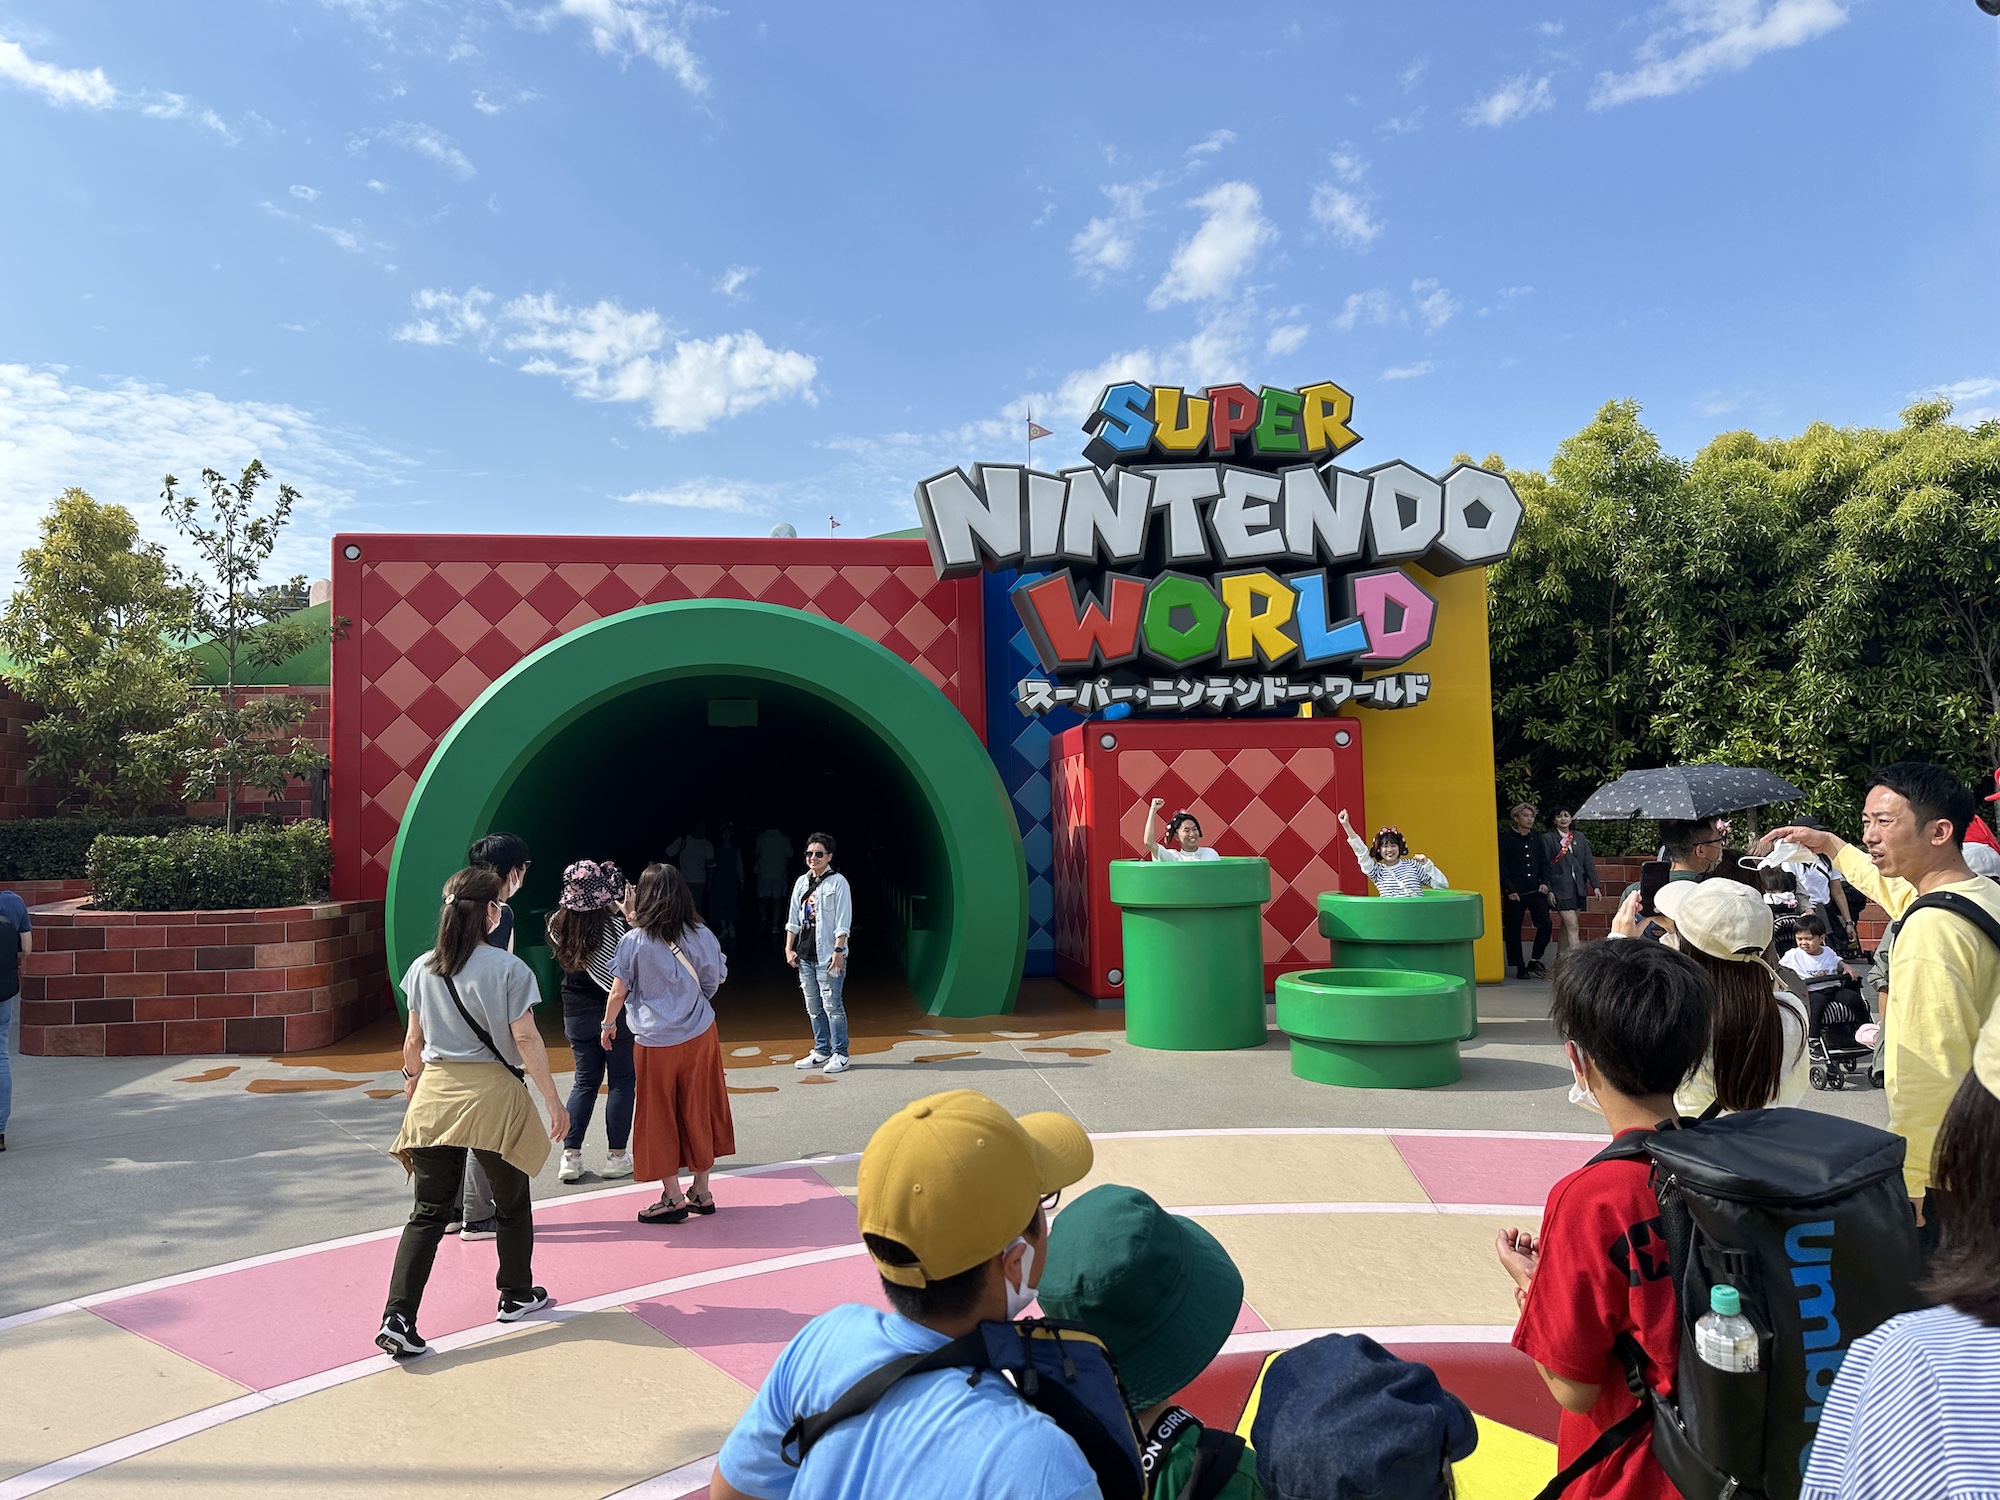 The entrance to Super Nintendo World at Universal Studios Japan